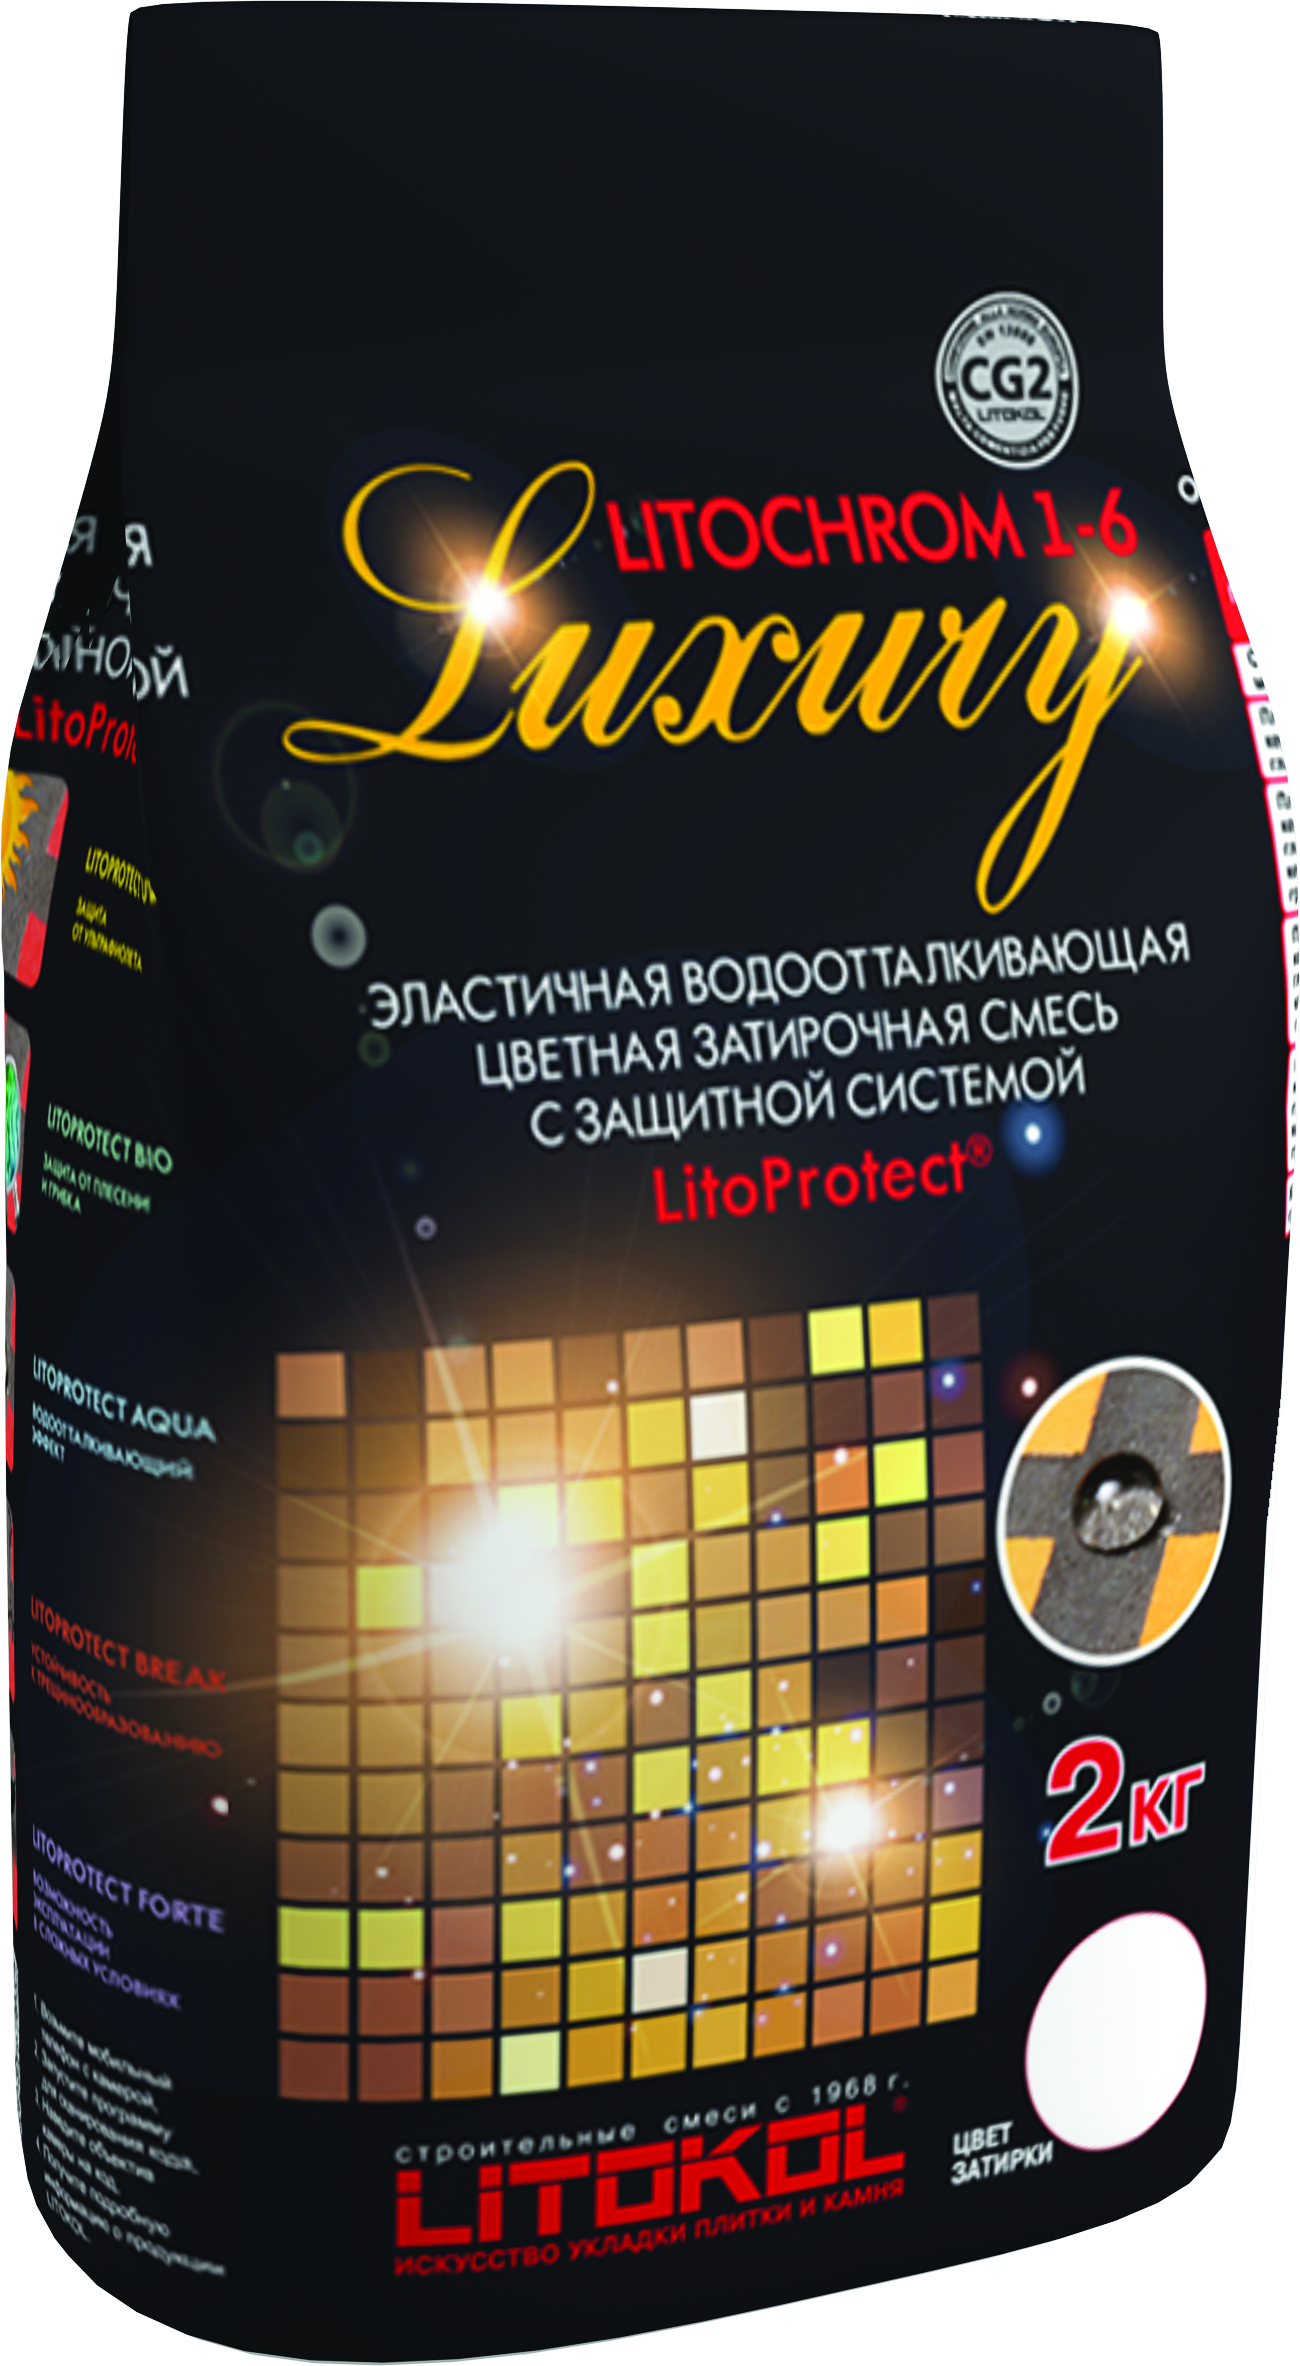 Купить Litokol Litochrom 1-6 Luxury C.80, 2 кг